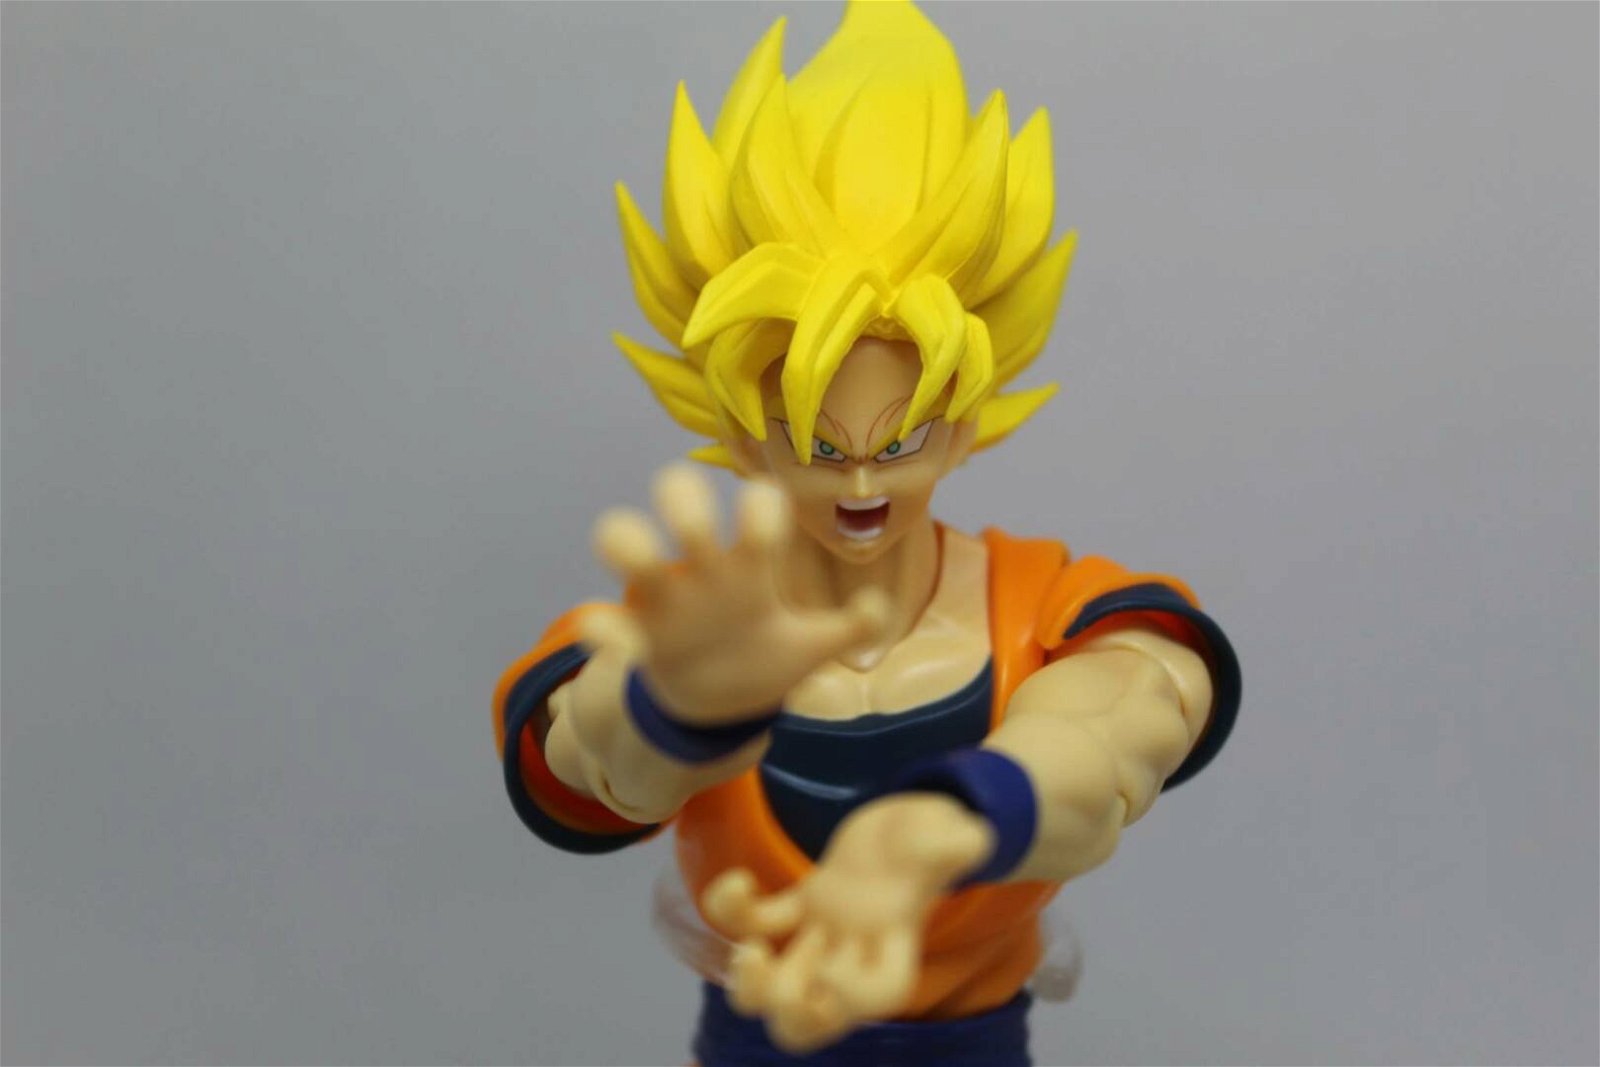 Immagine di Son Goku Super Saiyan Full Power di Tamashii Nations: recensione